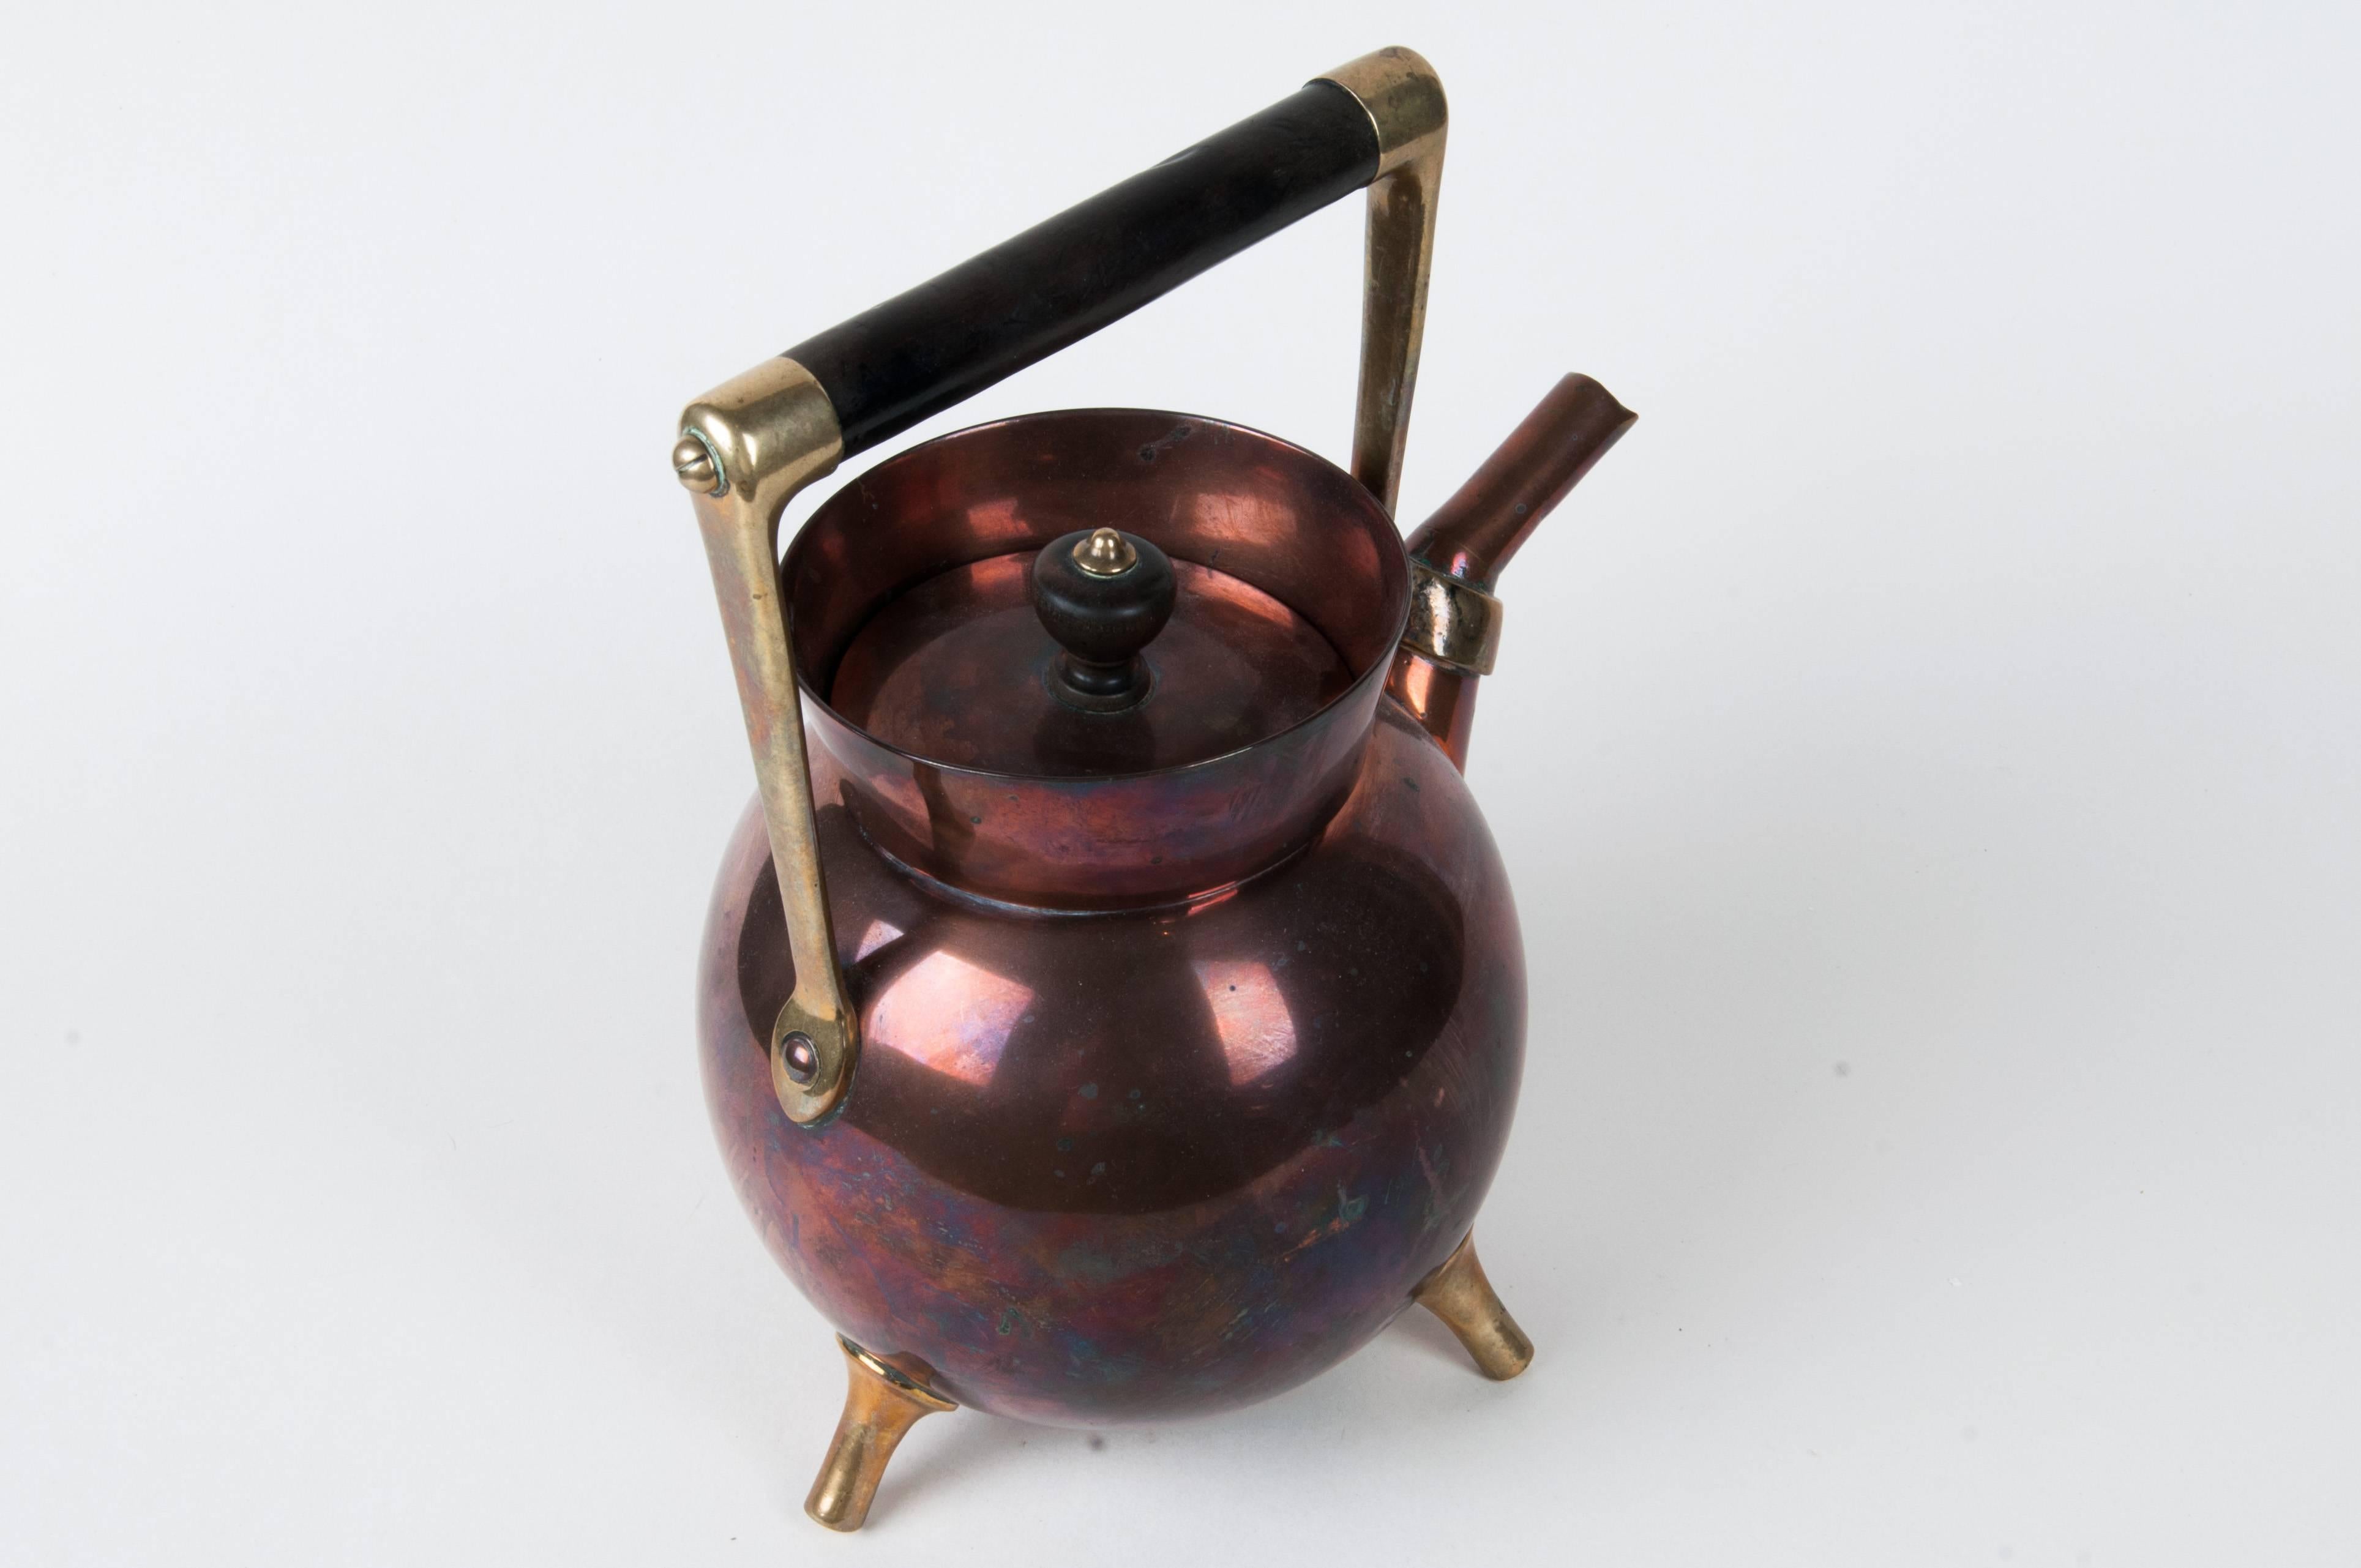 christopher dresser teapot for sale